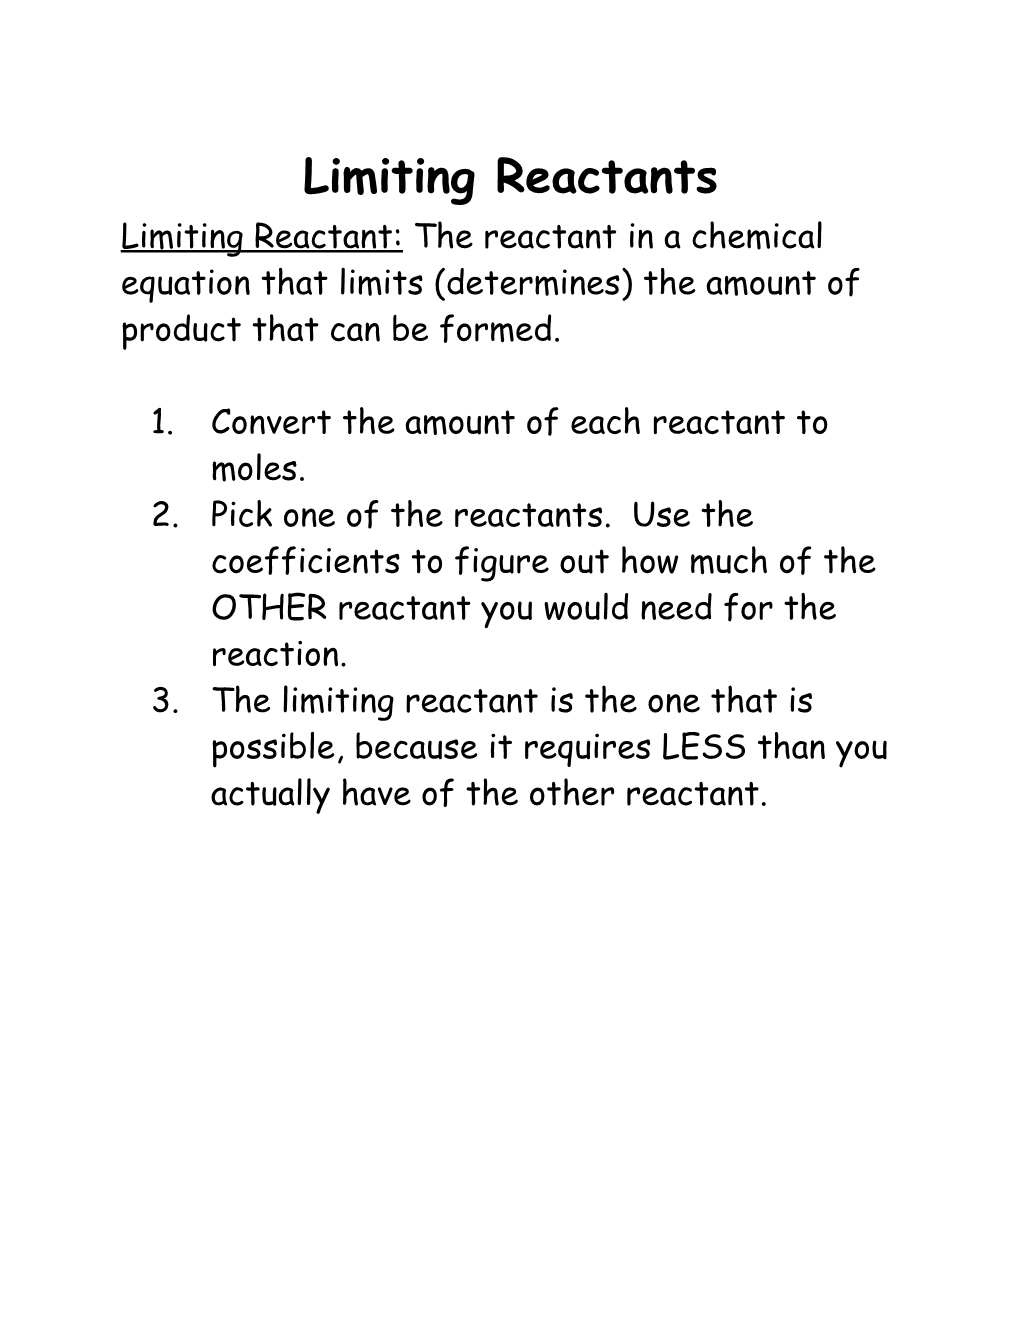 Limiting Reactants